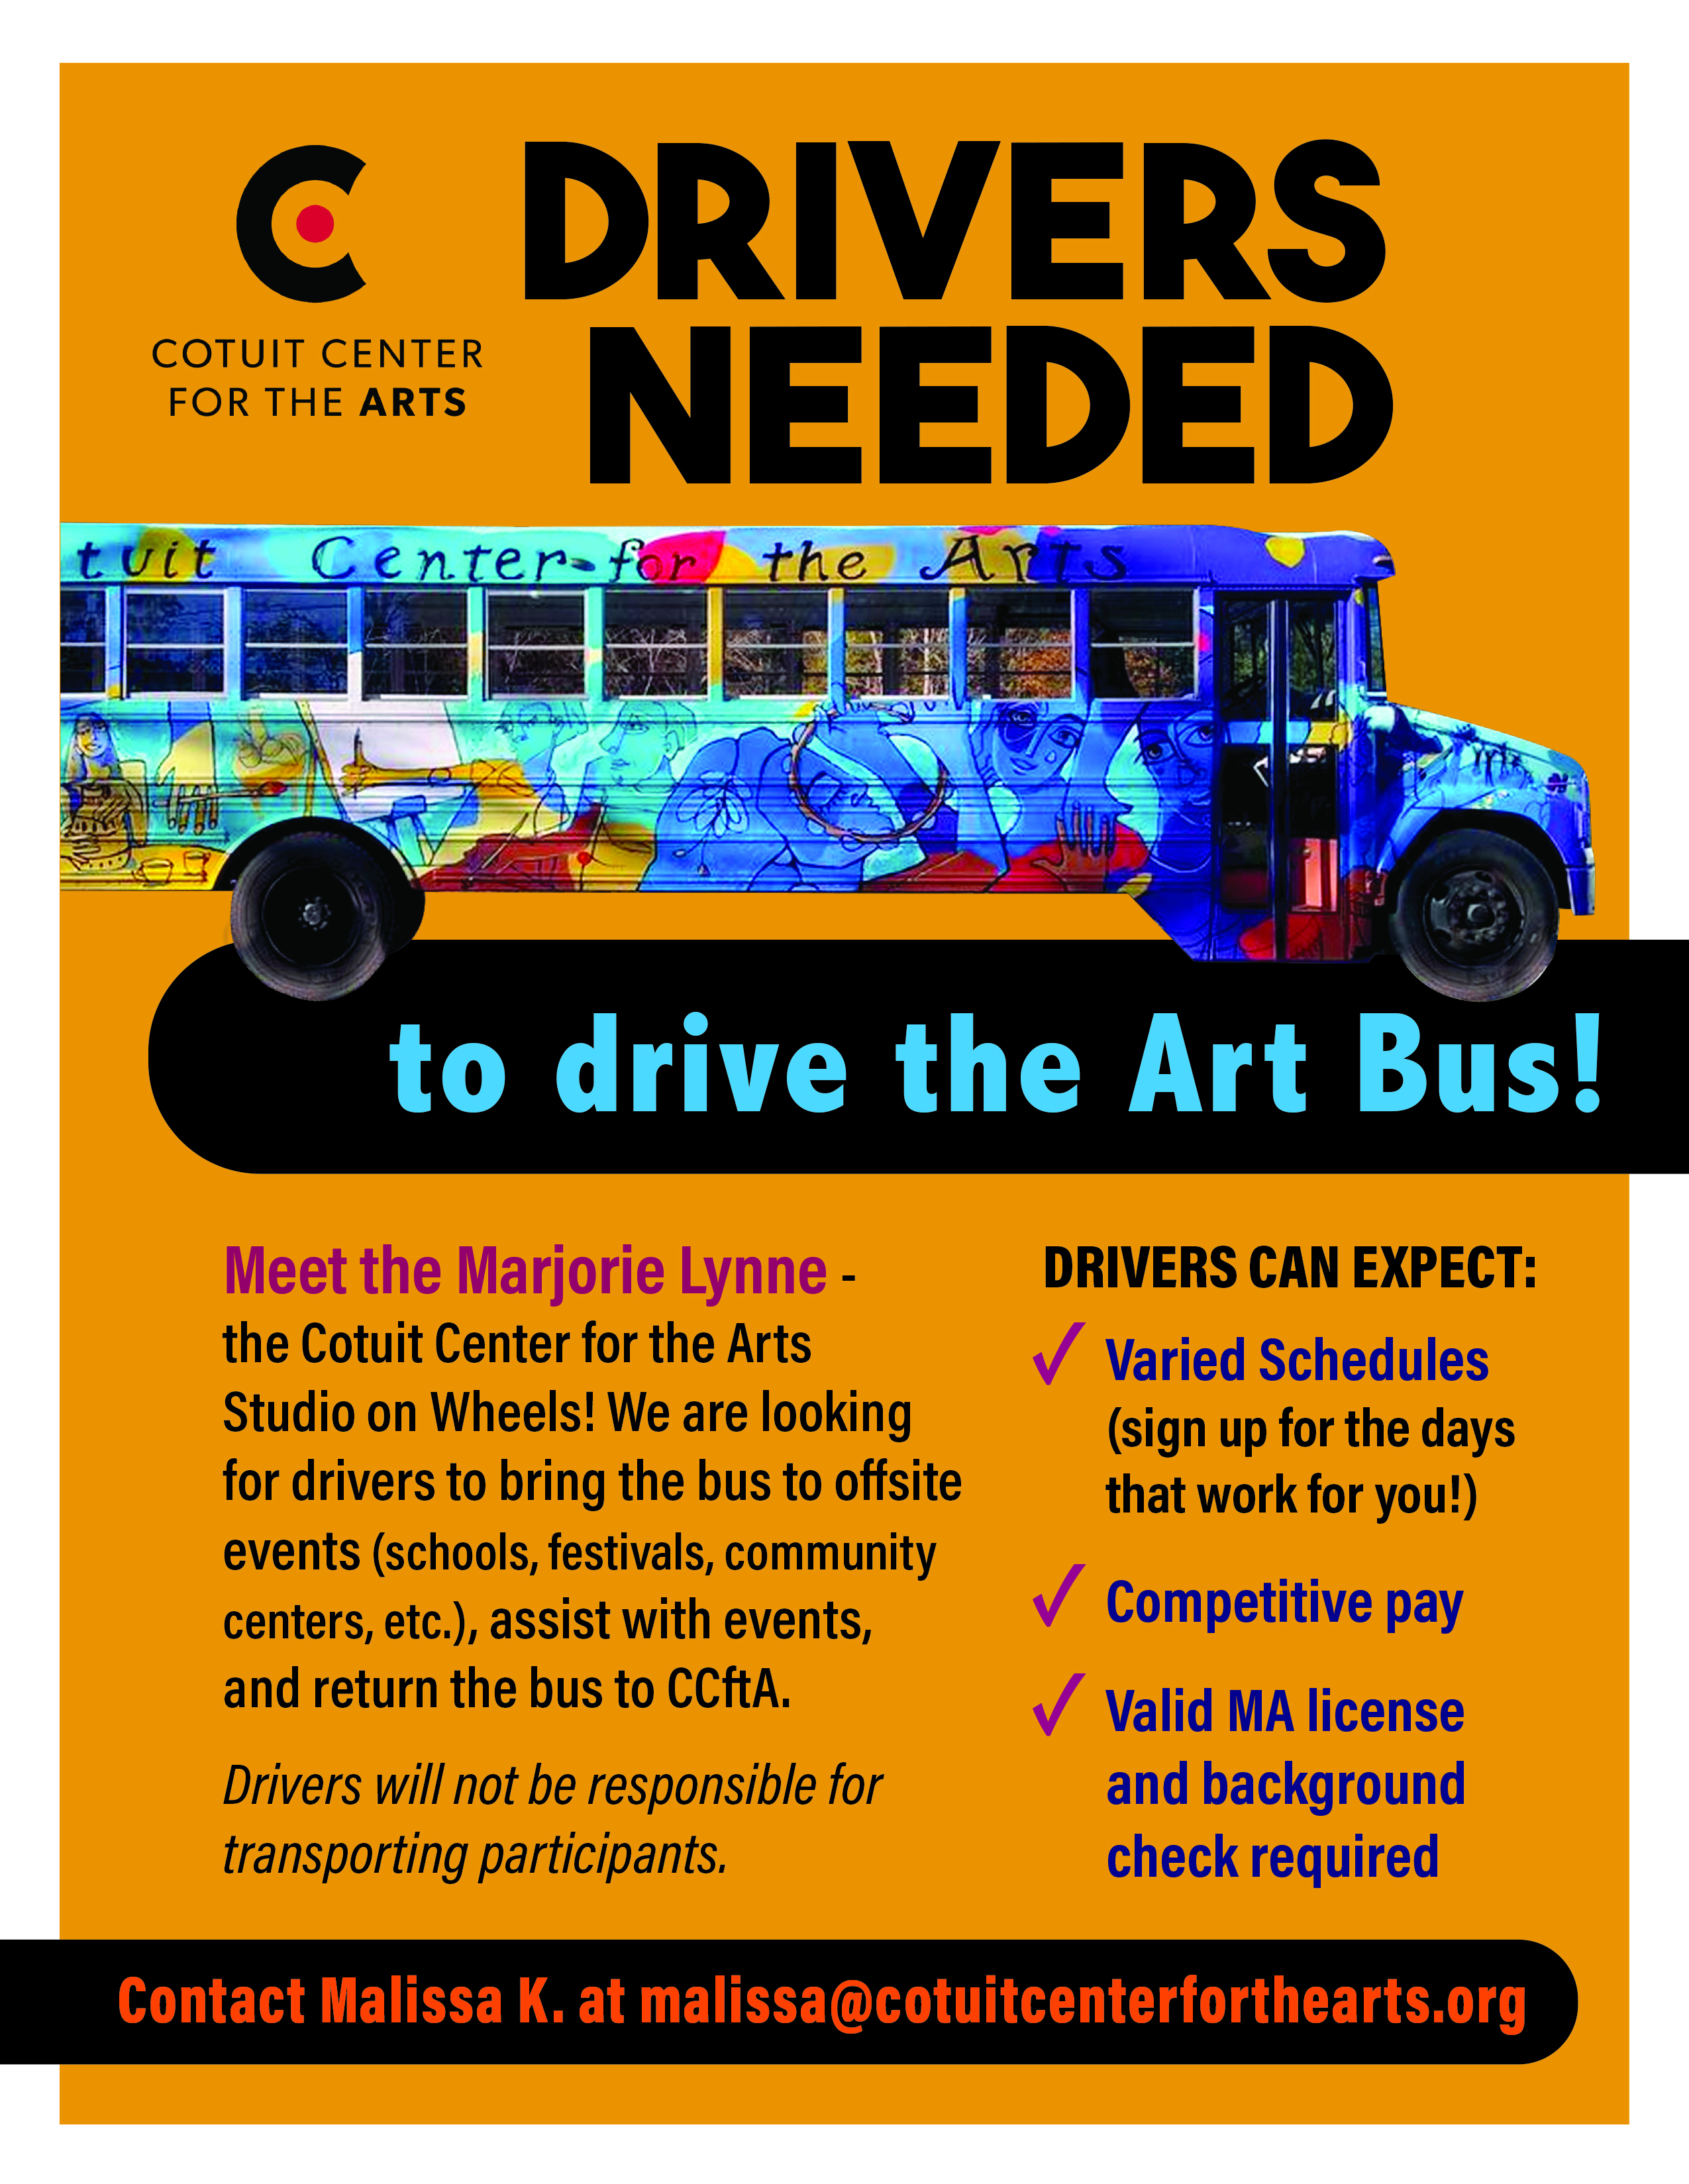 Art Bus Driver needed flyer